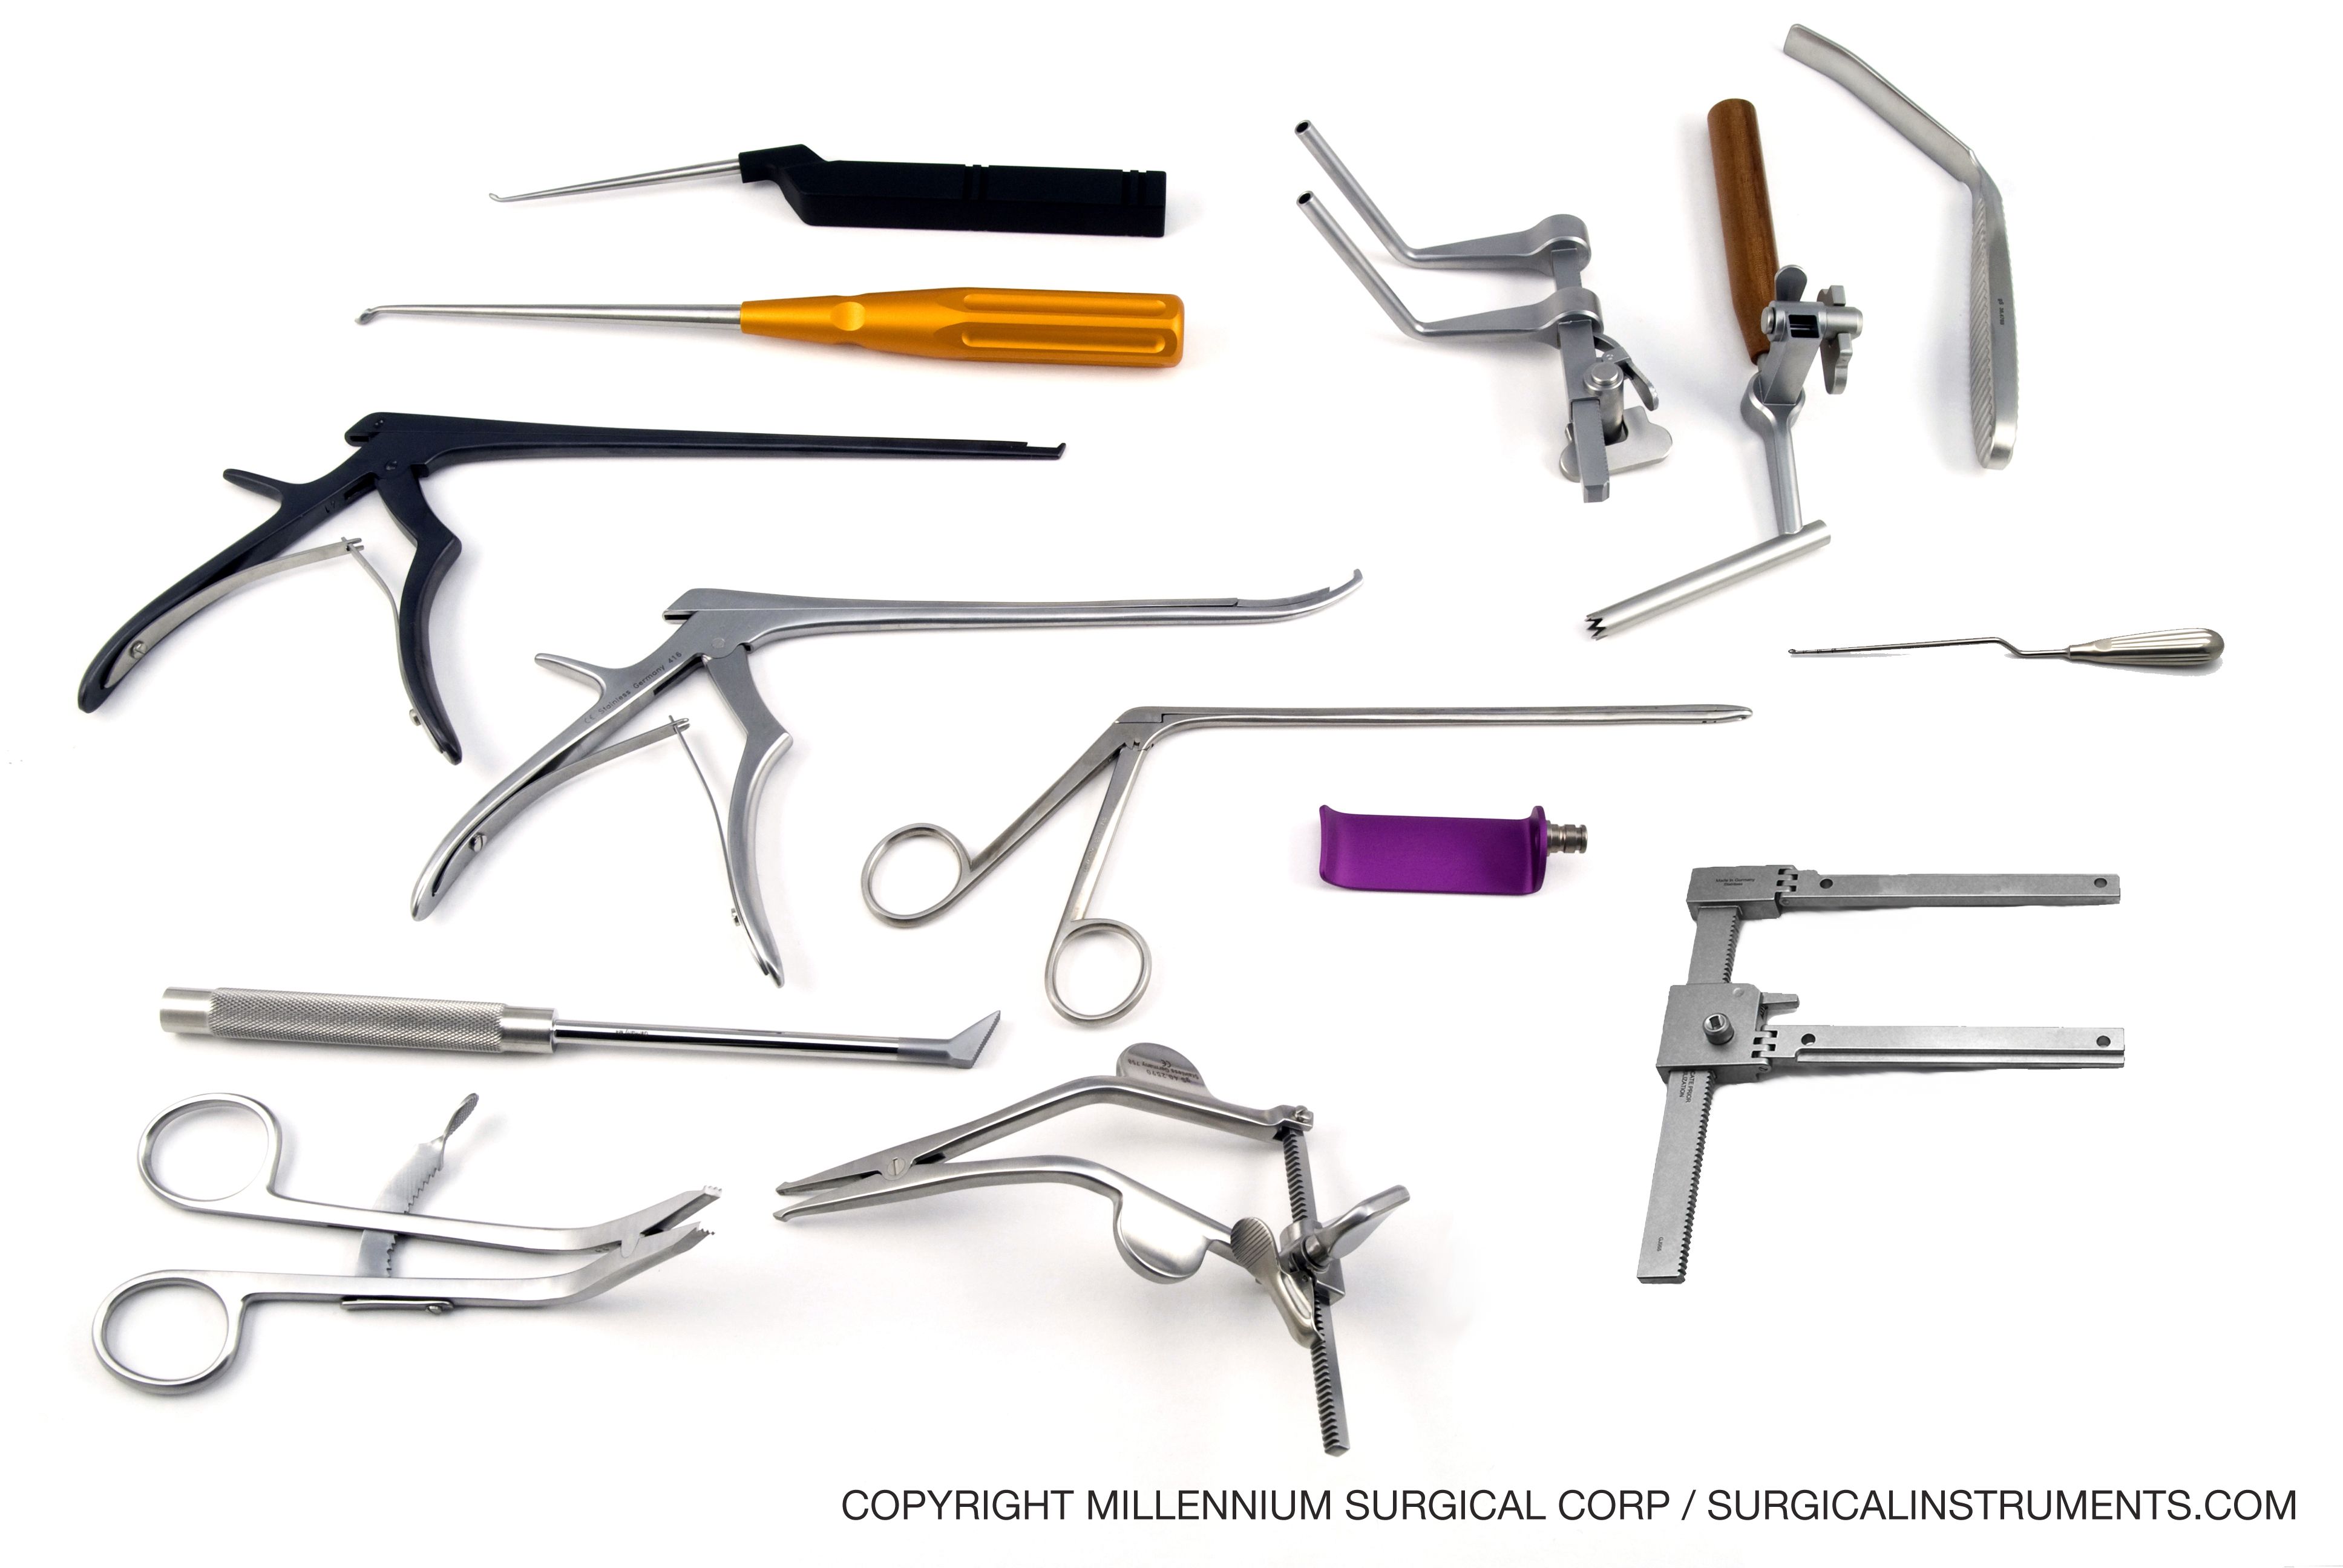 Laparoscopic Gynecology Surgical Instruments | Surgical Instruments ...